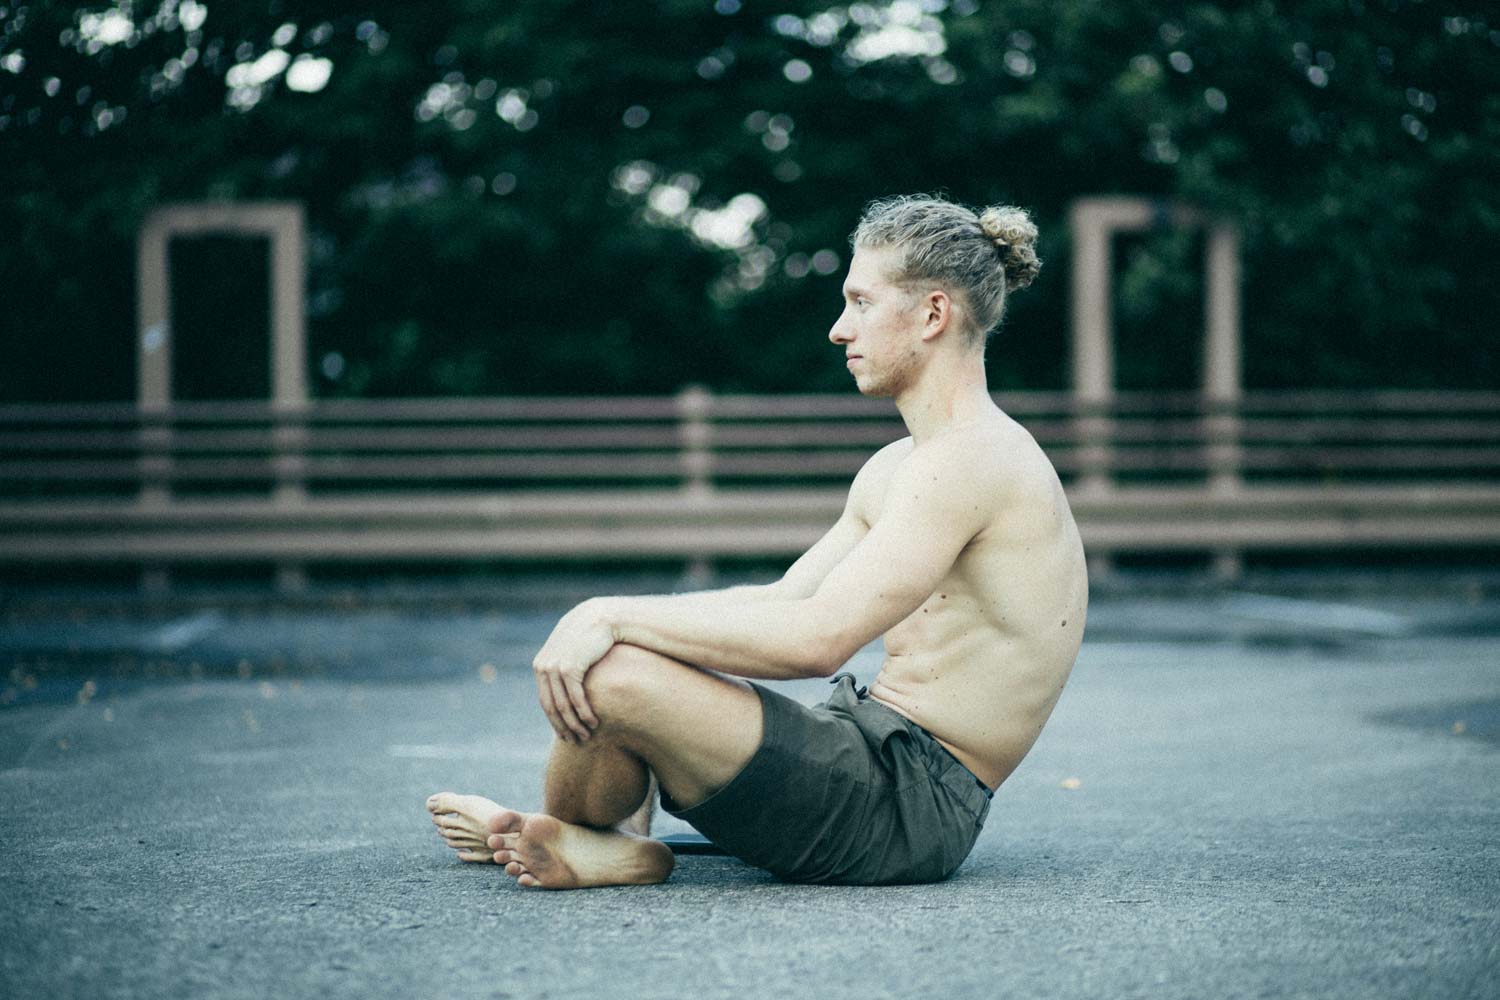 Yoga's Easy Sitting Pose: How to Make it Easier - YogaUOnline